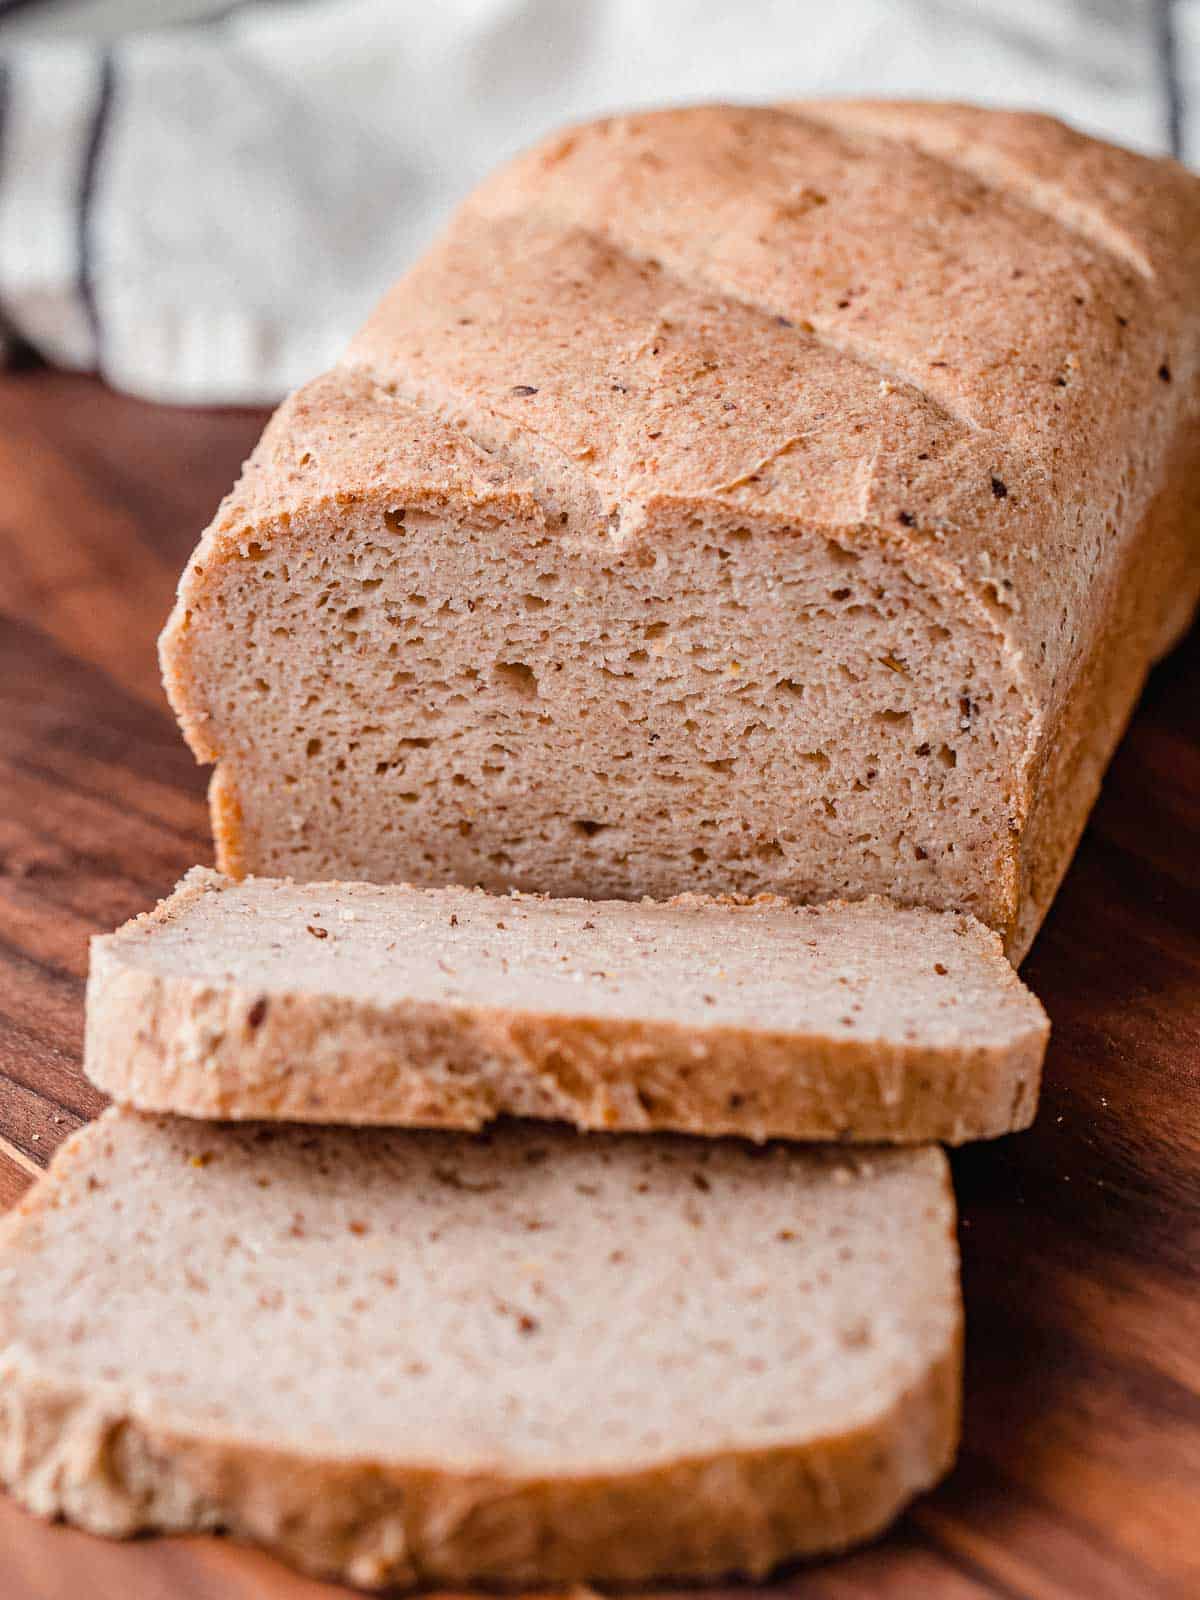 A loaf of gluten free sourdough bread on a cutting board.